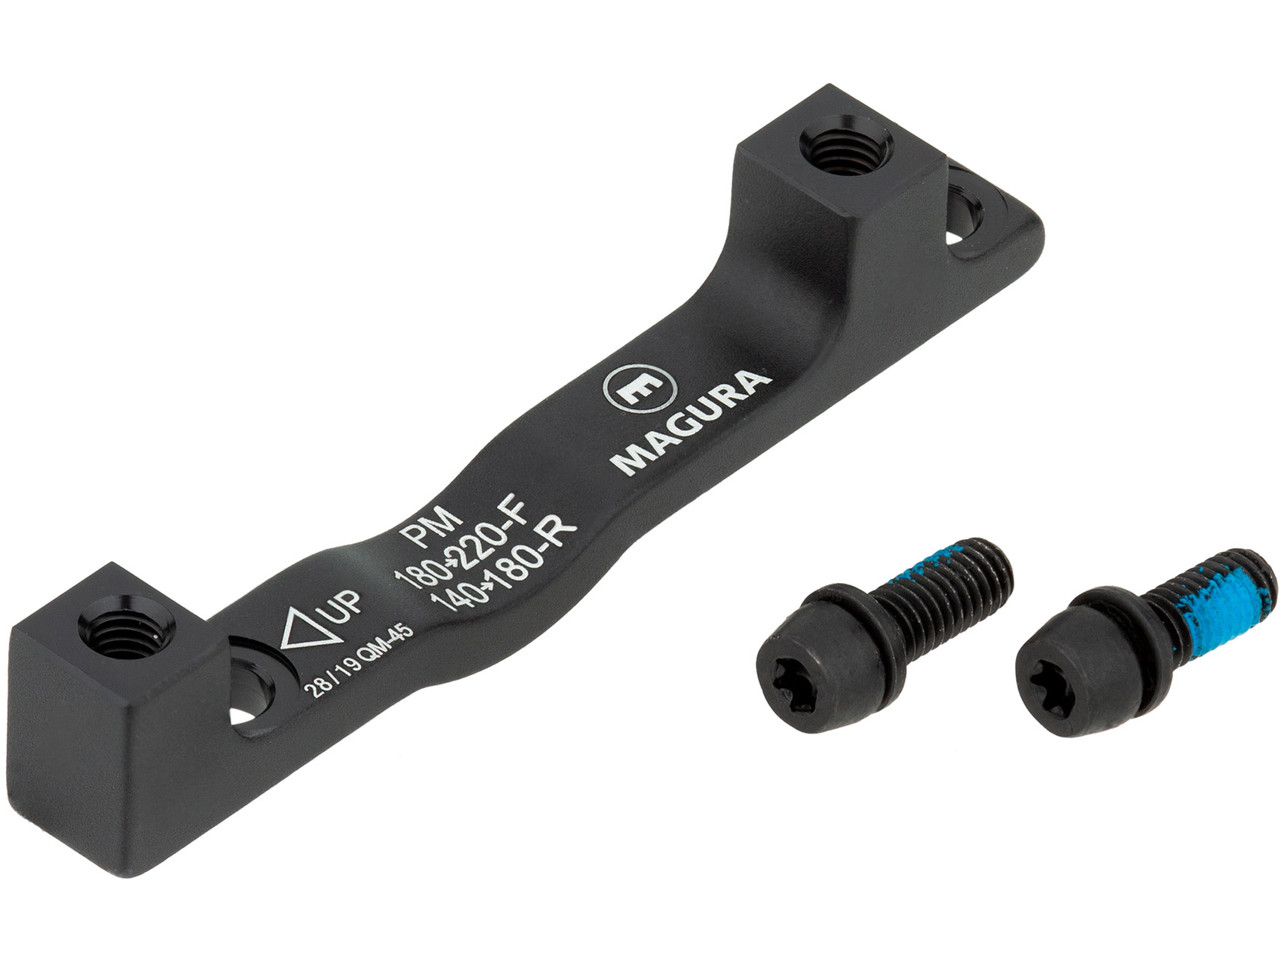 Adapter brake mount QM45 PM from 180 to 220mm Magura disc brake